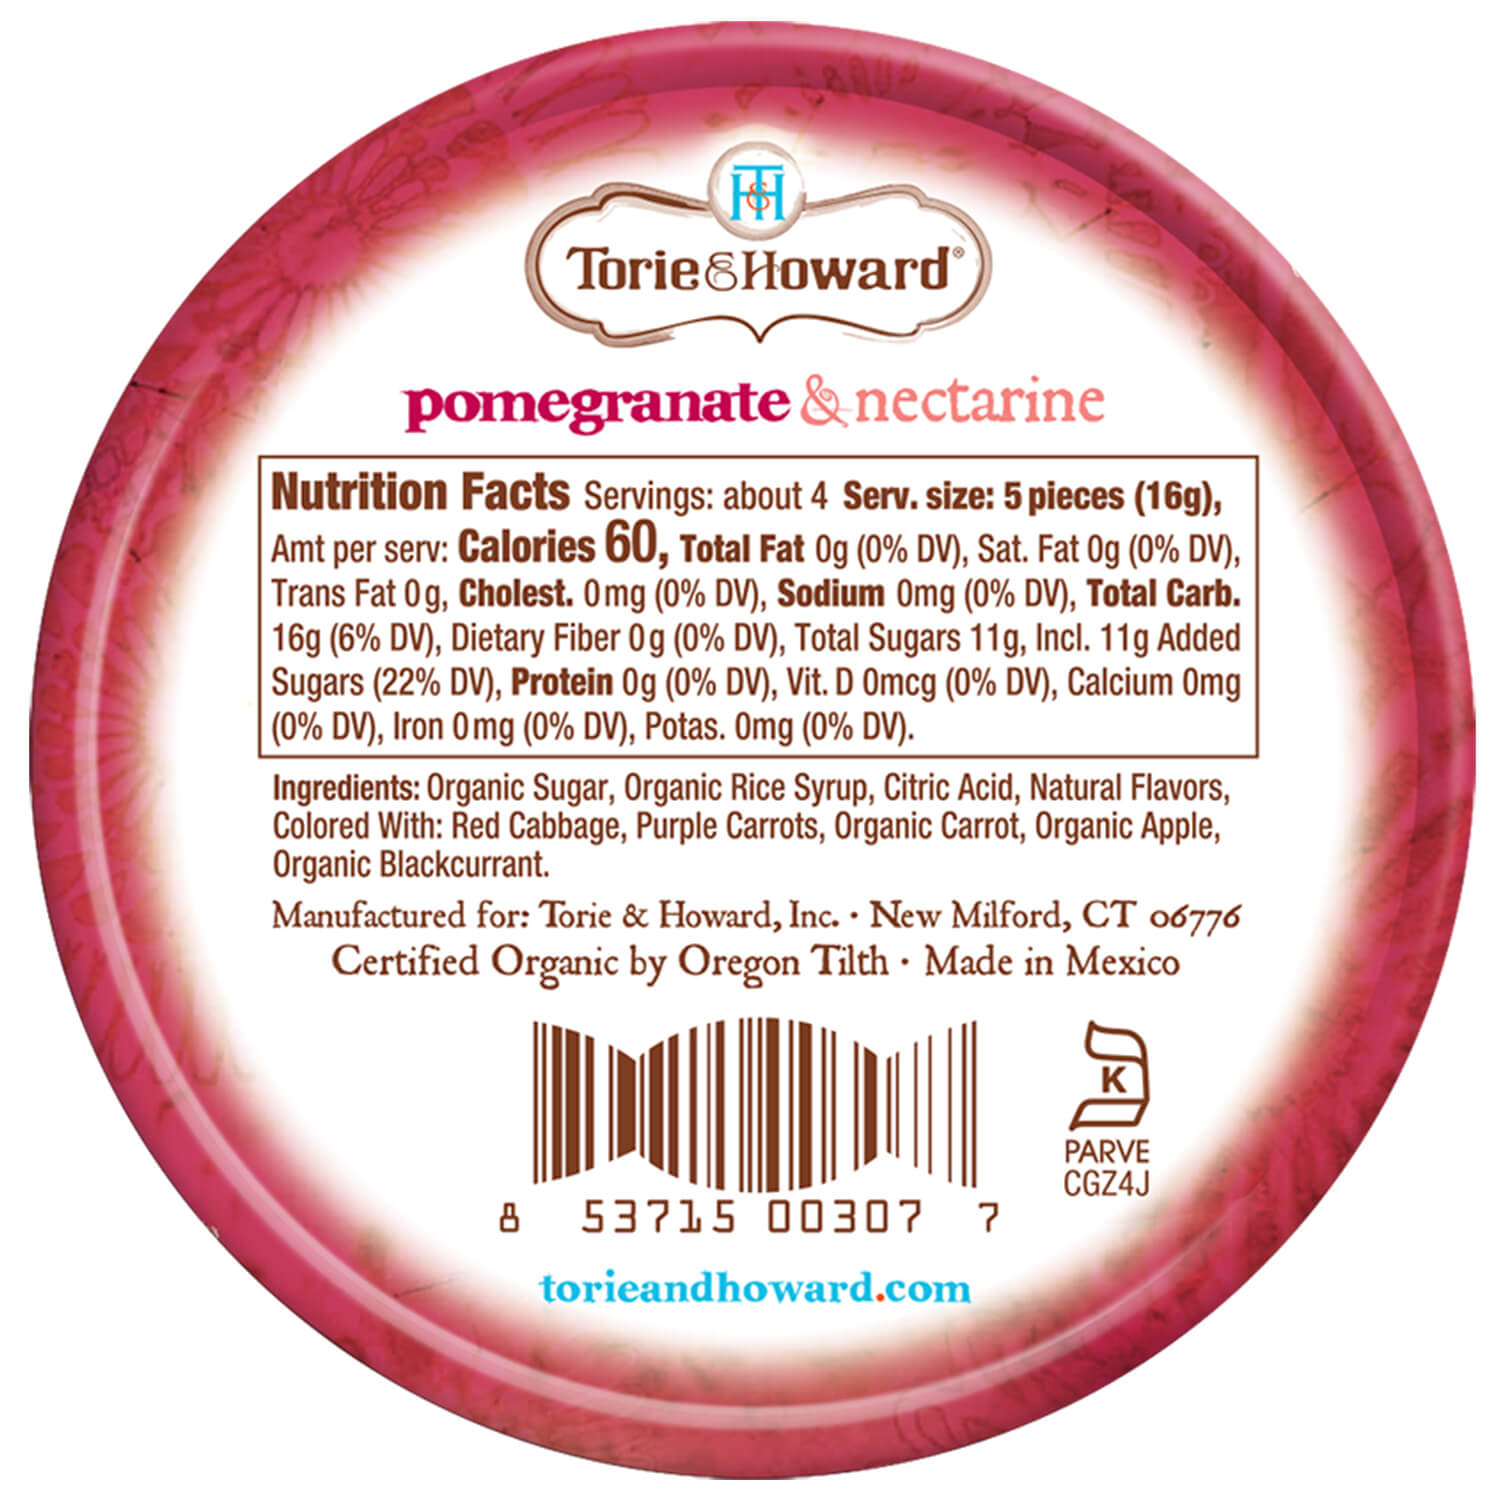 Torie & Howard Pomegranate & Nectarine Organic Hard Candy 2oz Tins (8ct Box)